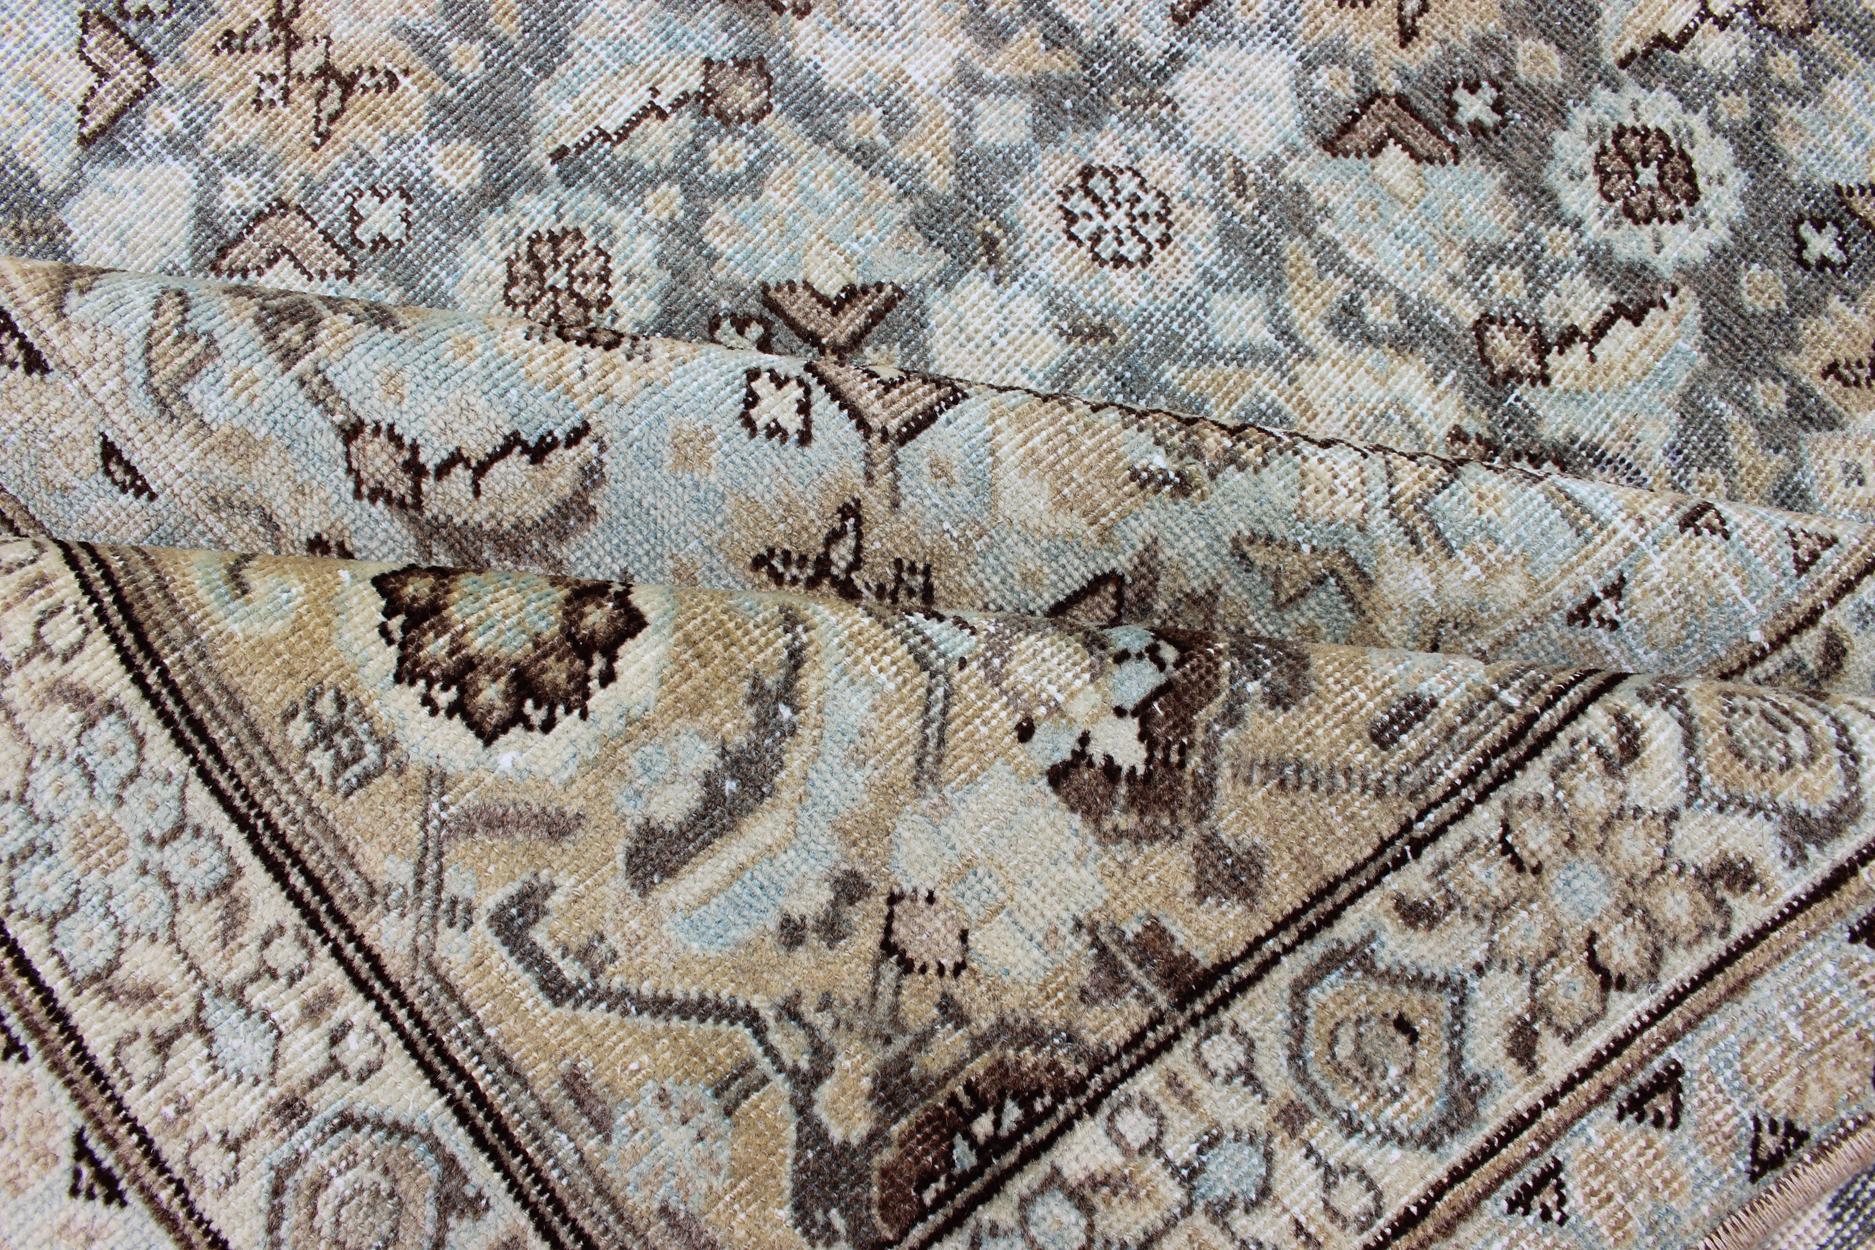 Antique Persian Tabriz Carpet with Geometric Diamond Design in Earth Tones For Sale 6